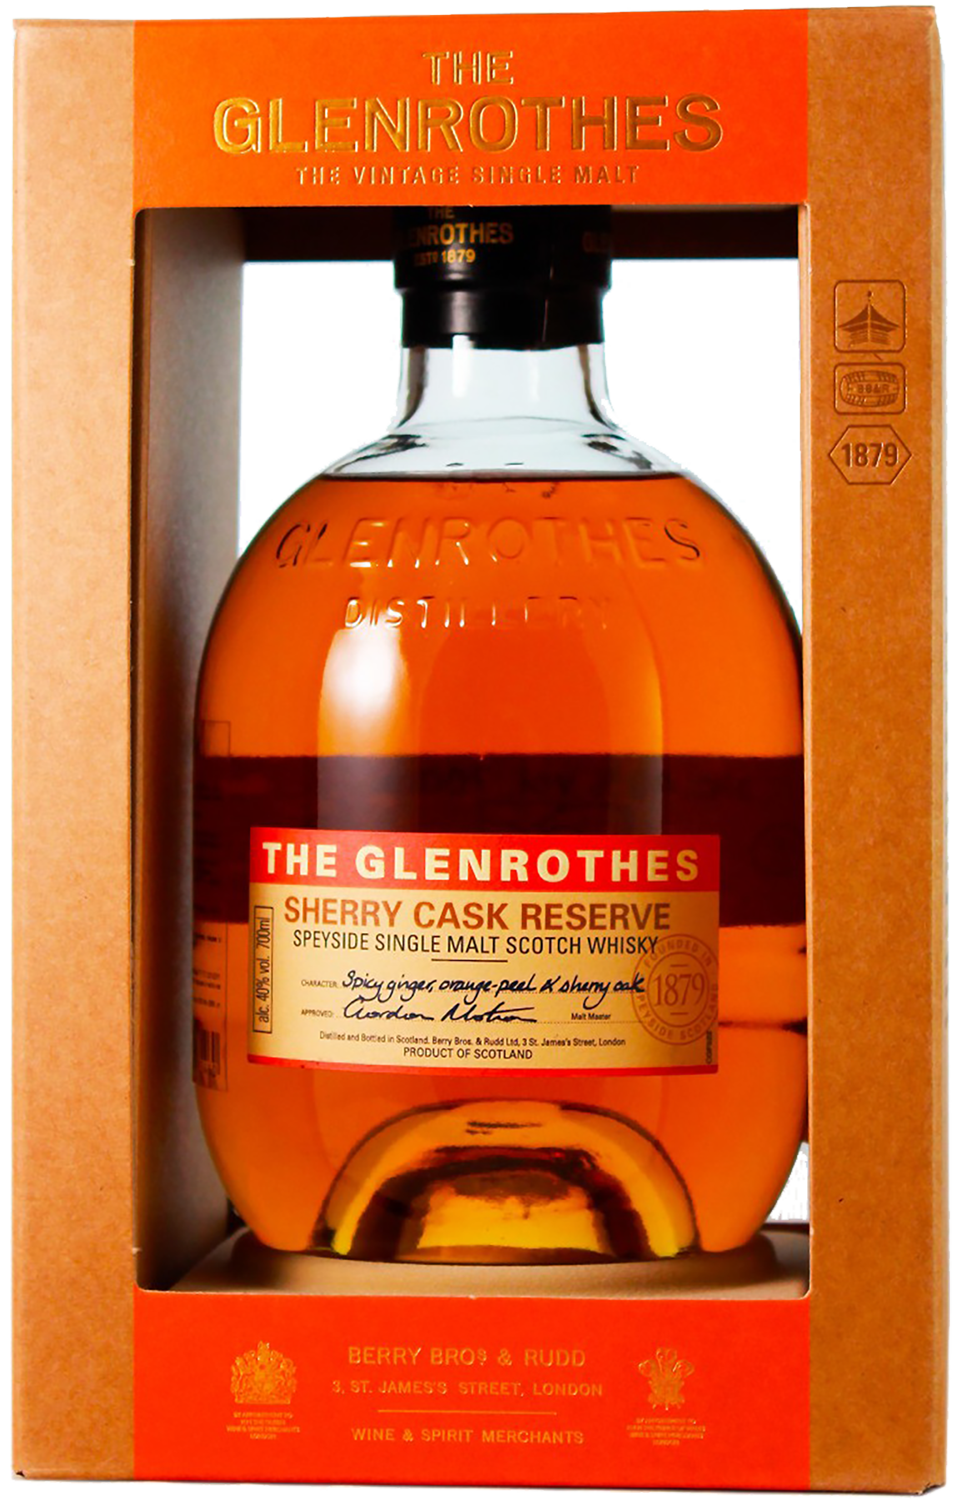 The Glenrothes Sherry Cask Reserve Speyside Single Malt Scotch Whisky(gift box) the glenrothes bourbon cask reserve speyside single malt scotch whisky gift box